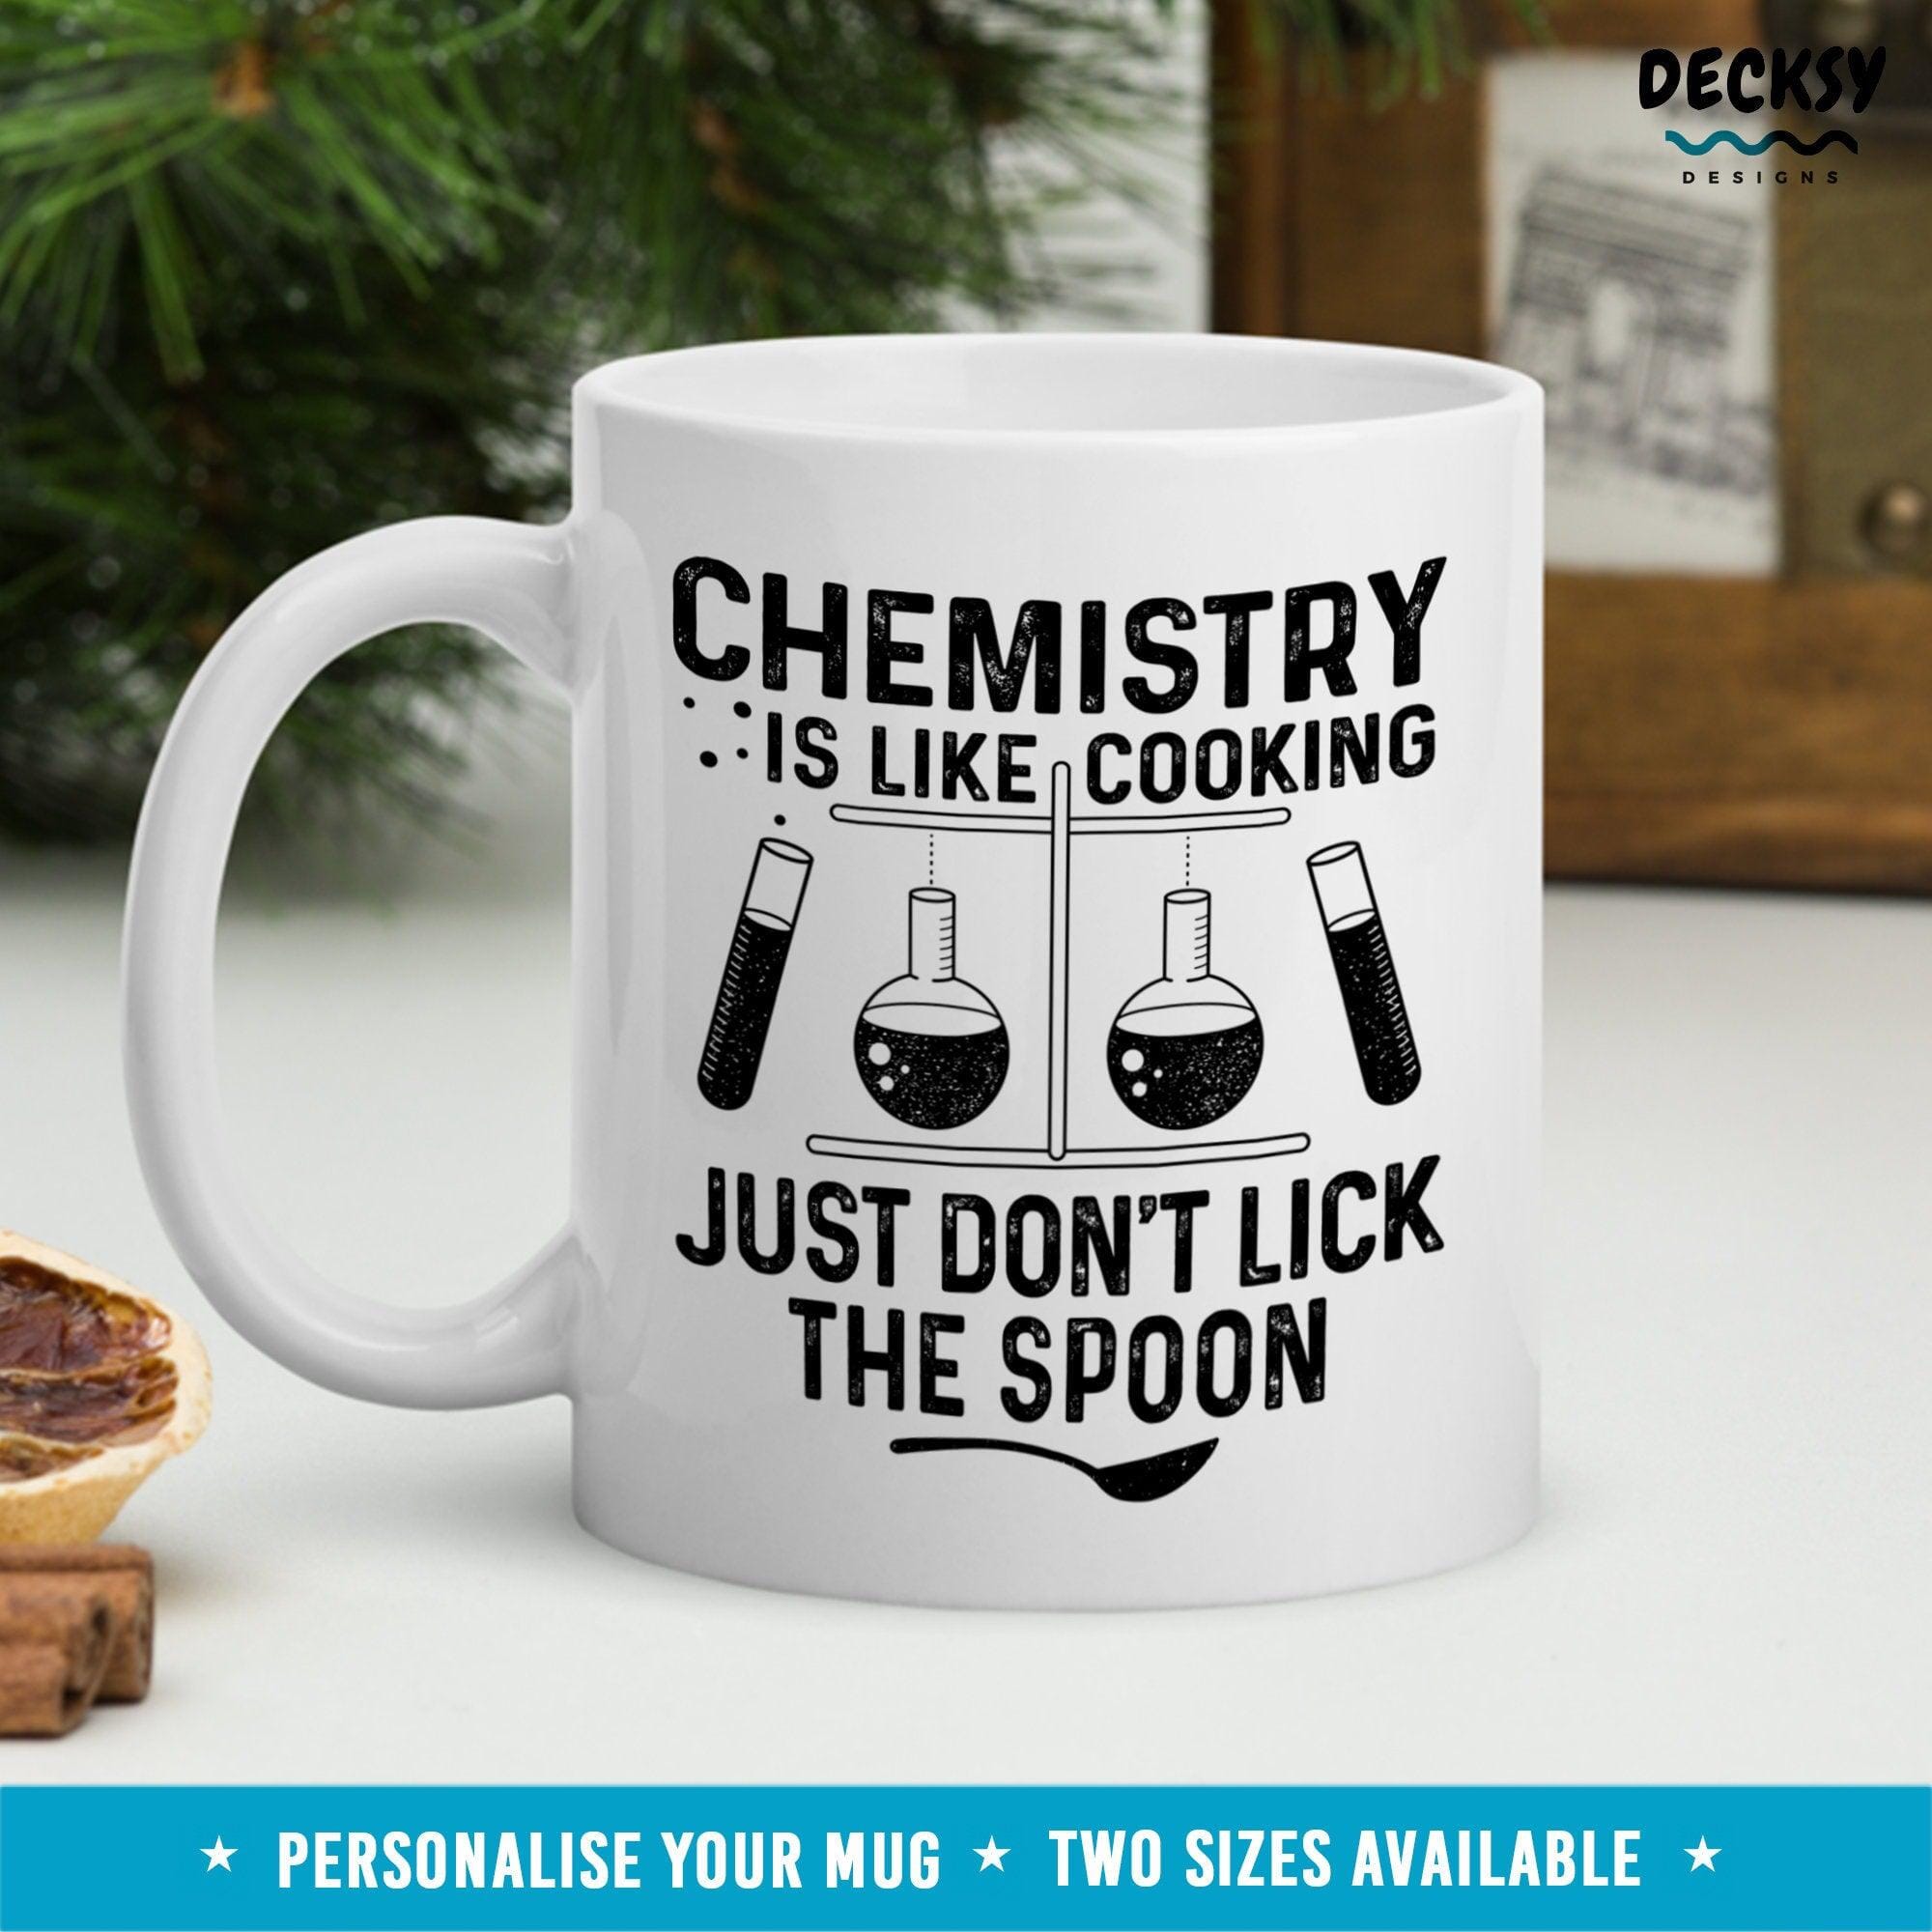 Personalised Chemistry Mug, Funny Science Teacher Gift-Home & Living:Kitchen & Dining:Drink & Barware:Drinkware:Mugs-DecksyDesigns-11 Oz-NO PERSONALISATION-DecksyDesigns